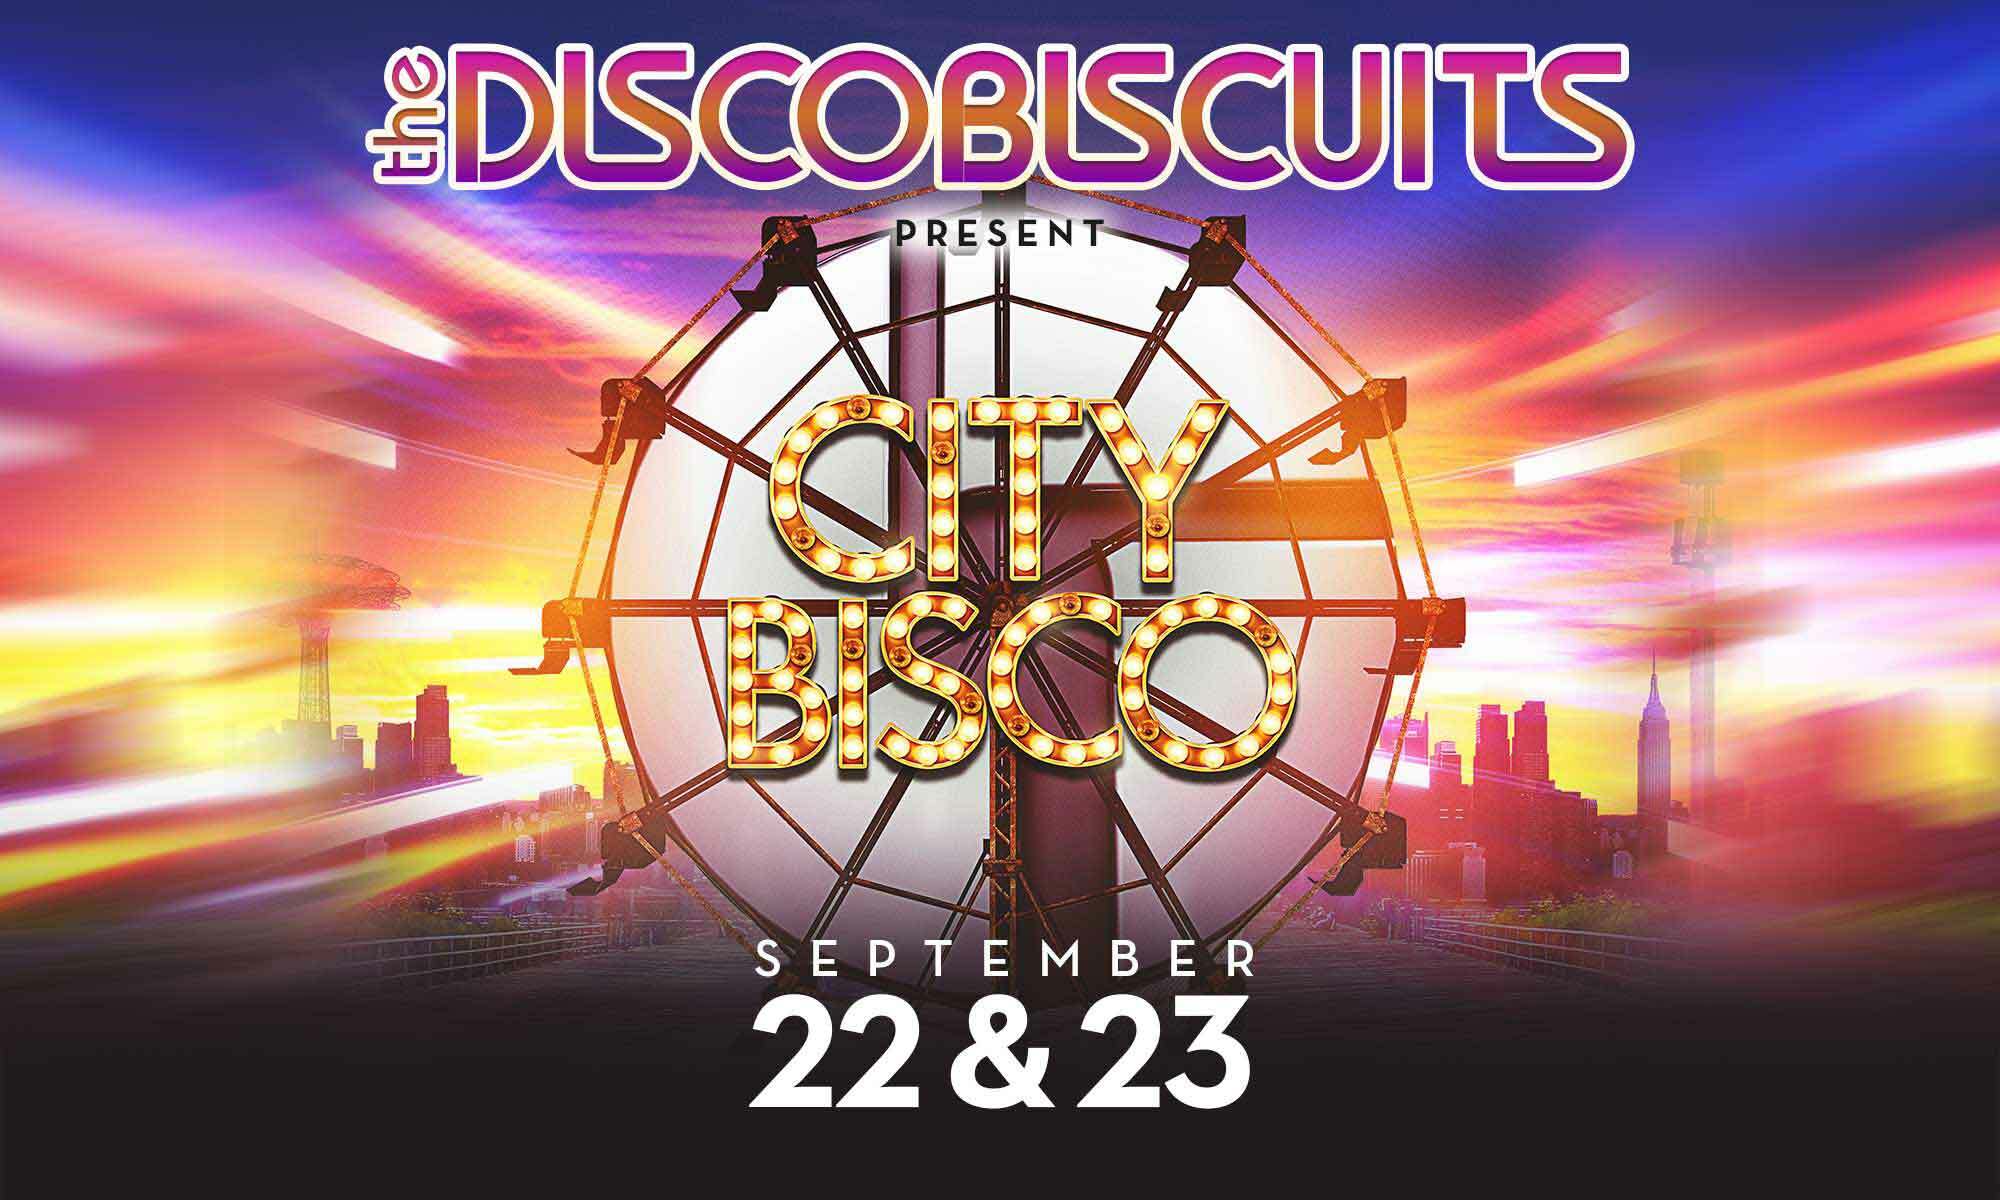 The Disco Biscuits Present: City Bisco Live Show